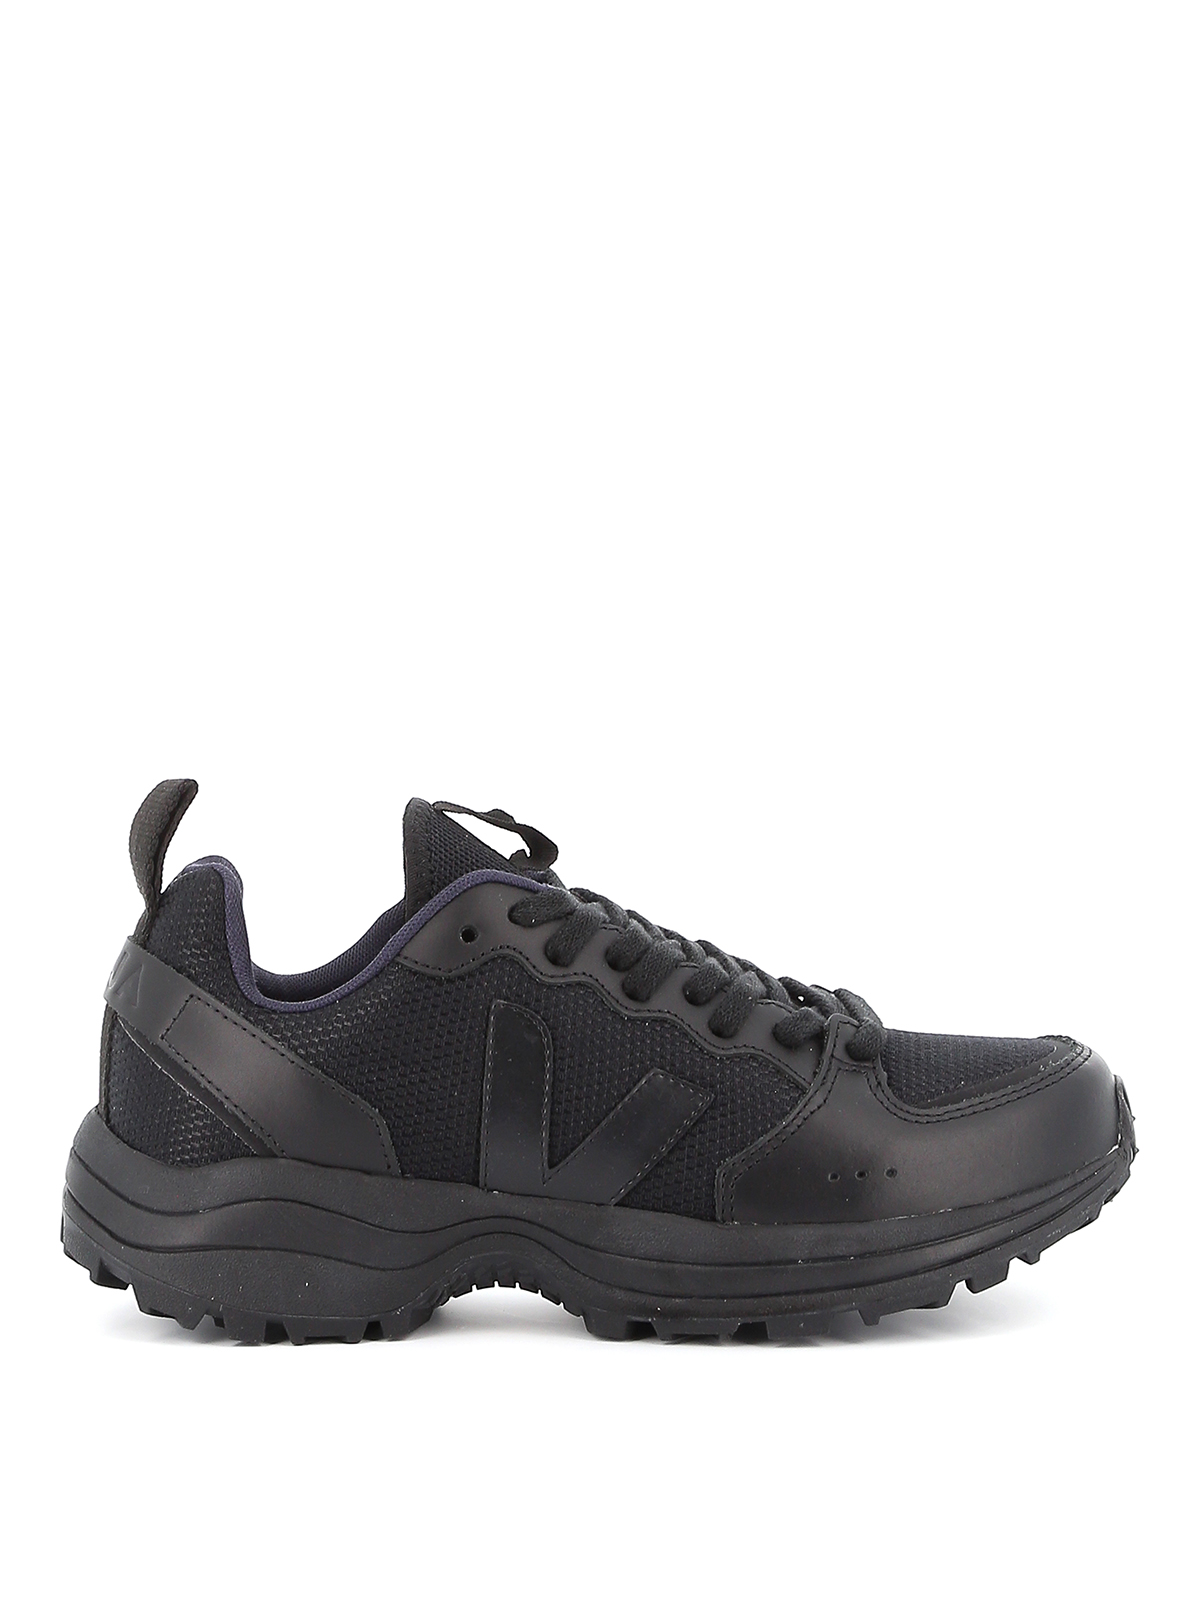 Trainers Veja - Venturi B-Mesh sneakers - VT011926 | Shop online at iKRIX